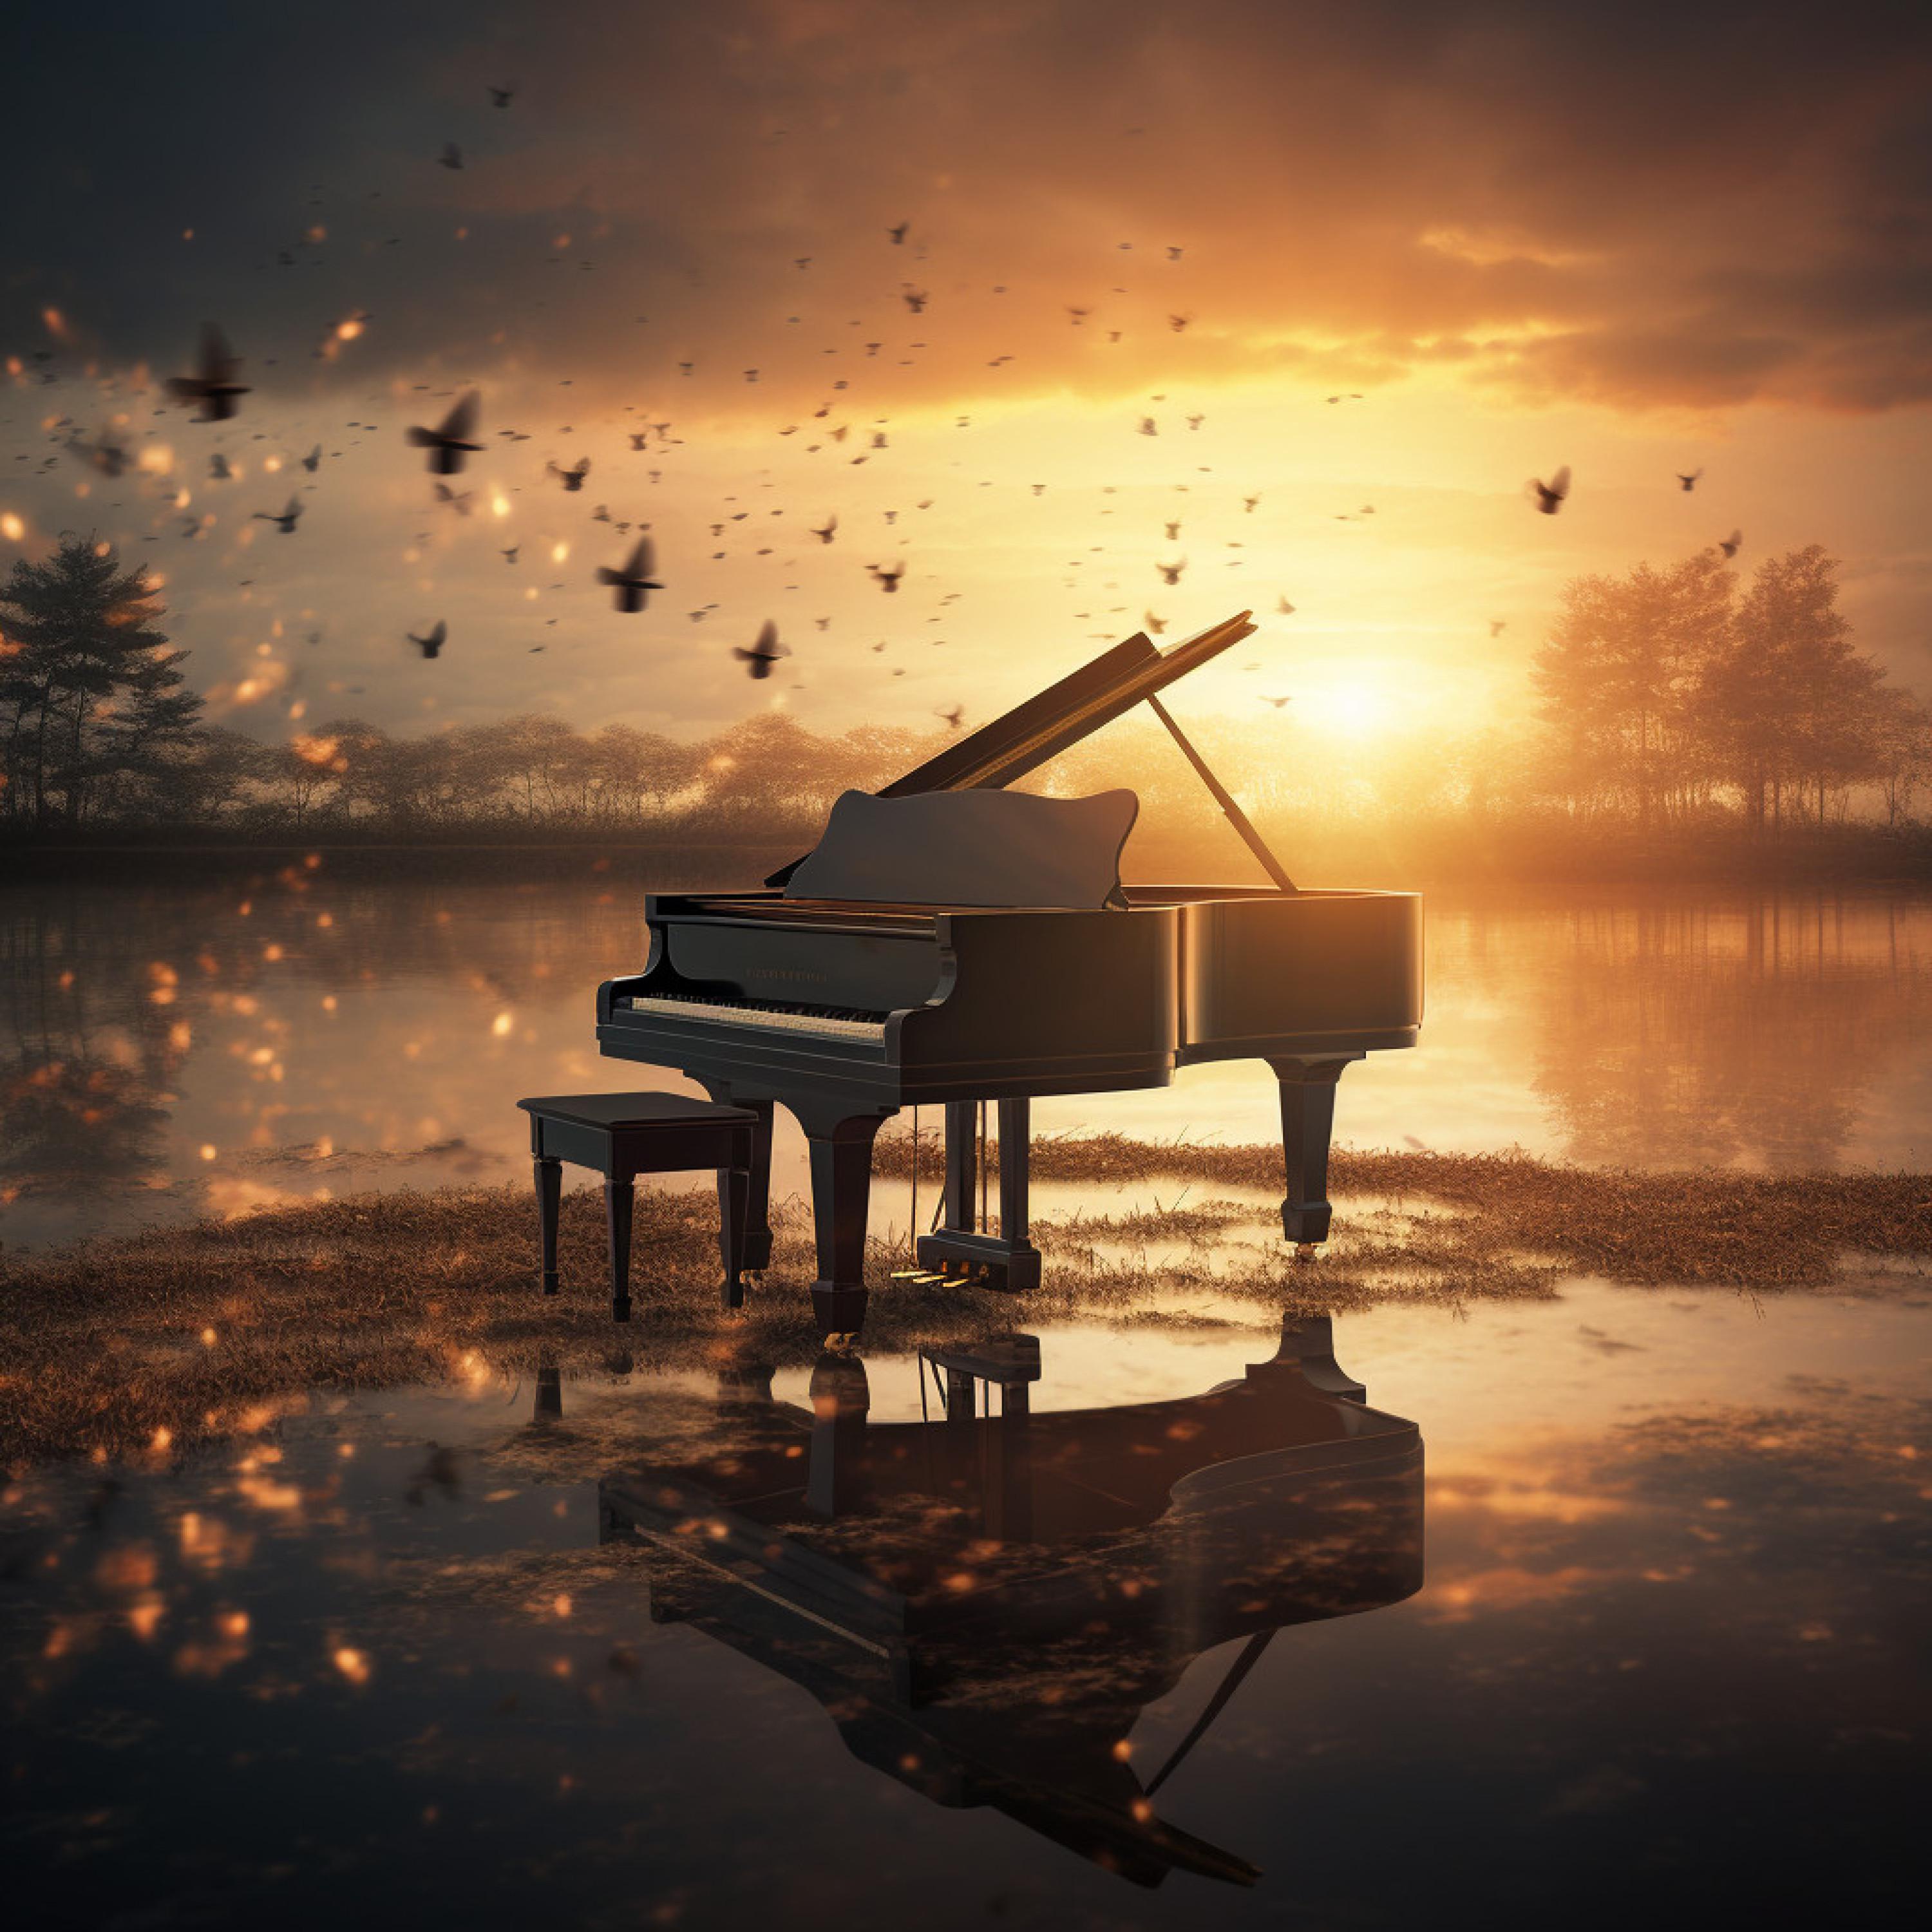 Tranquil Piano - Piano Delight in Night Sky